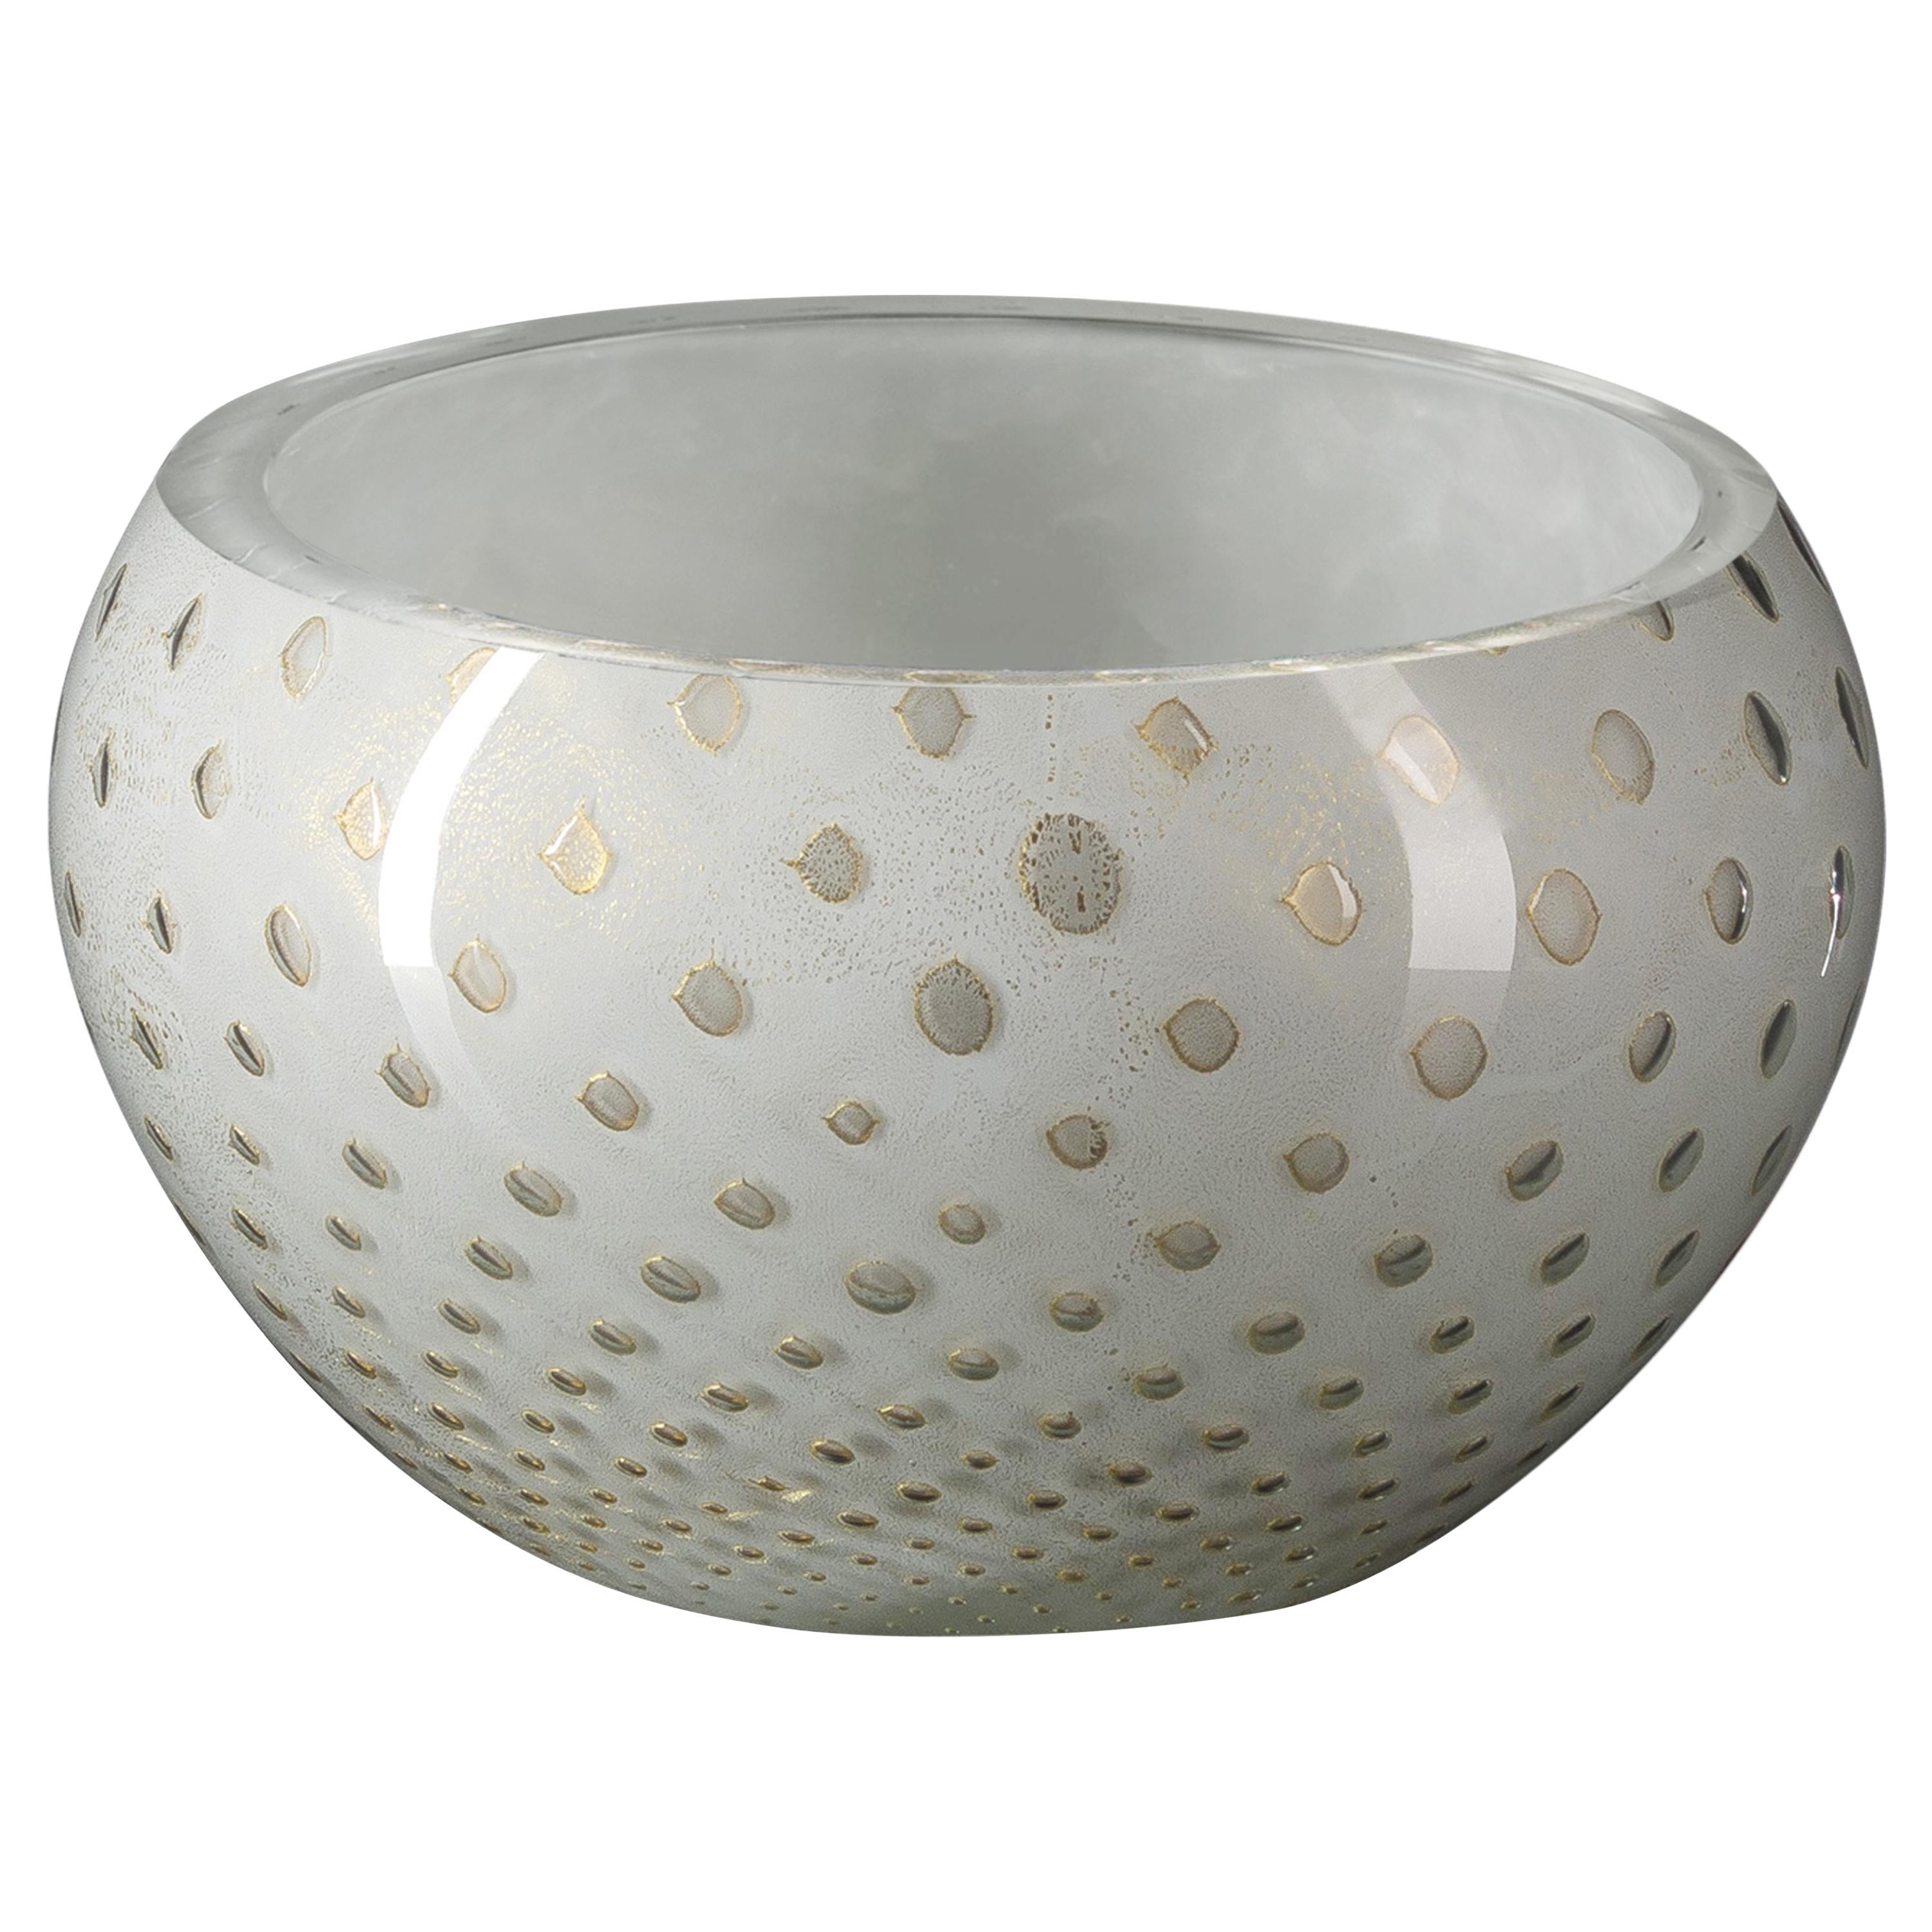 Bowl Mocenigo, Muranese Glass, Gold 24-Karat and White, Italy